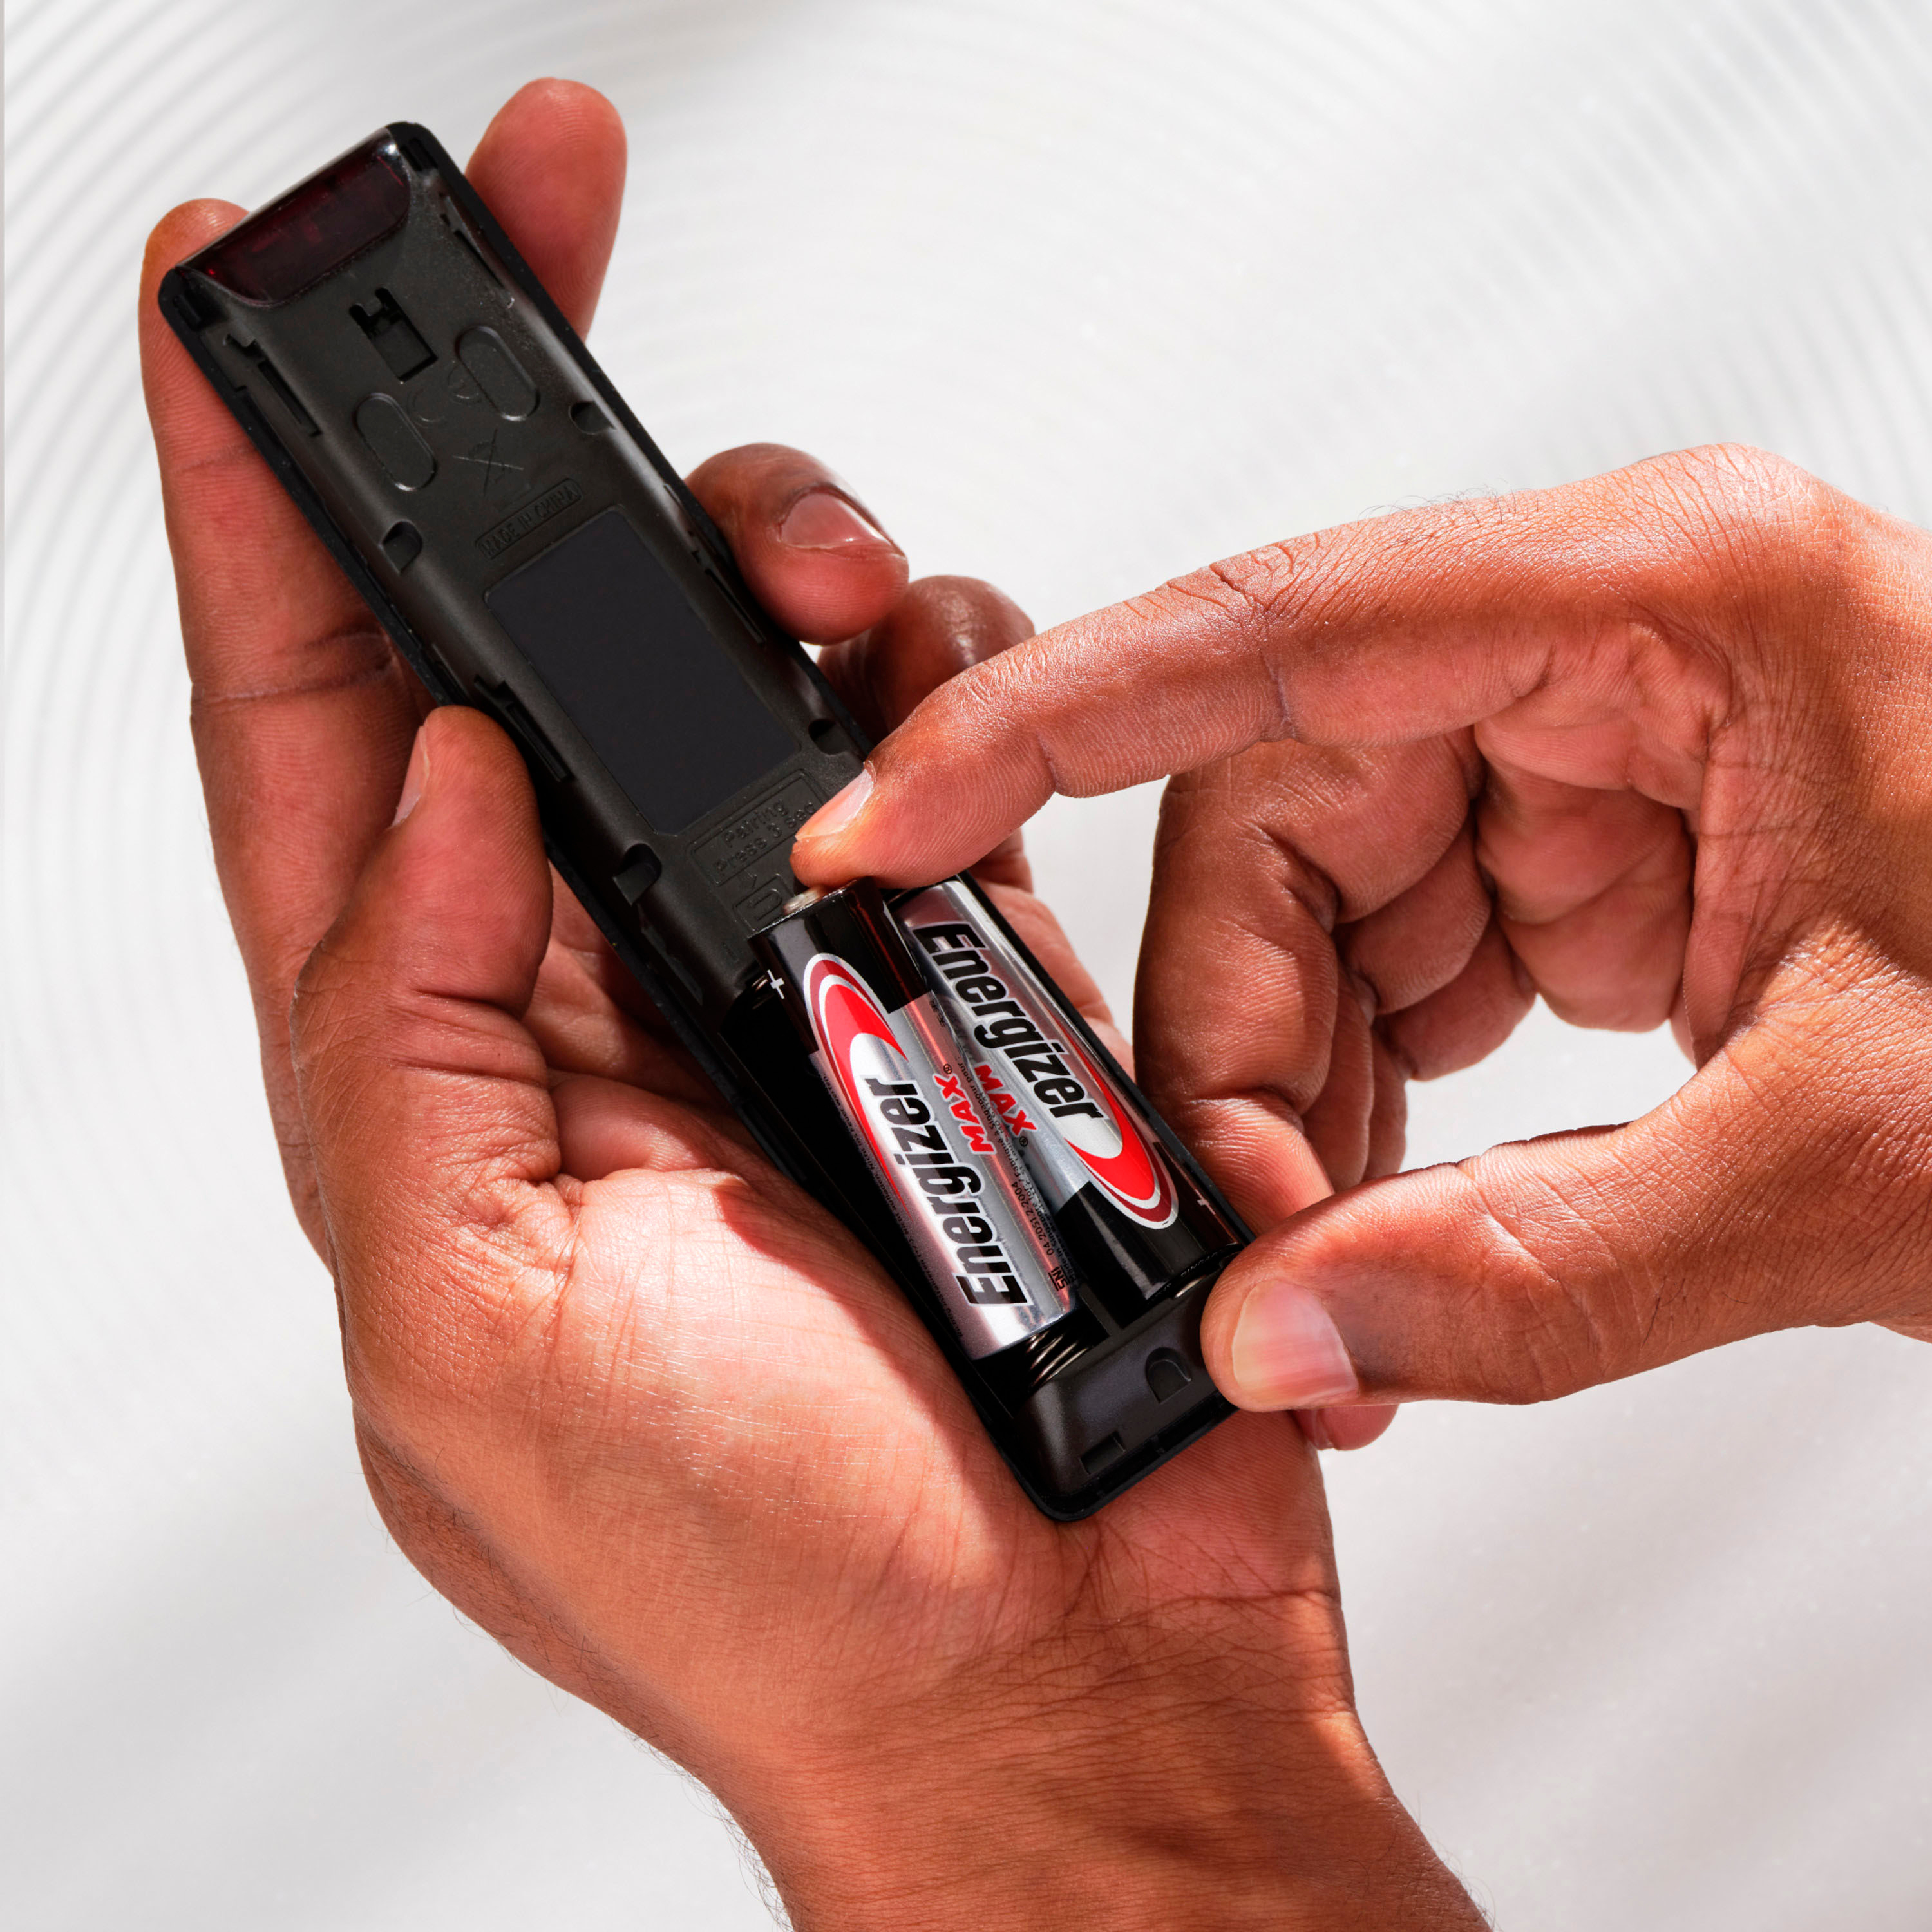 Energizer MAX AA Batteries (24 Pack), Double A Alkaline Batteries E91BP-24  - Best Buy